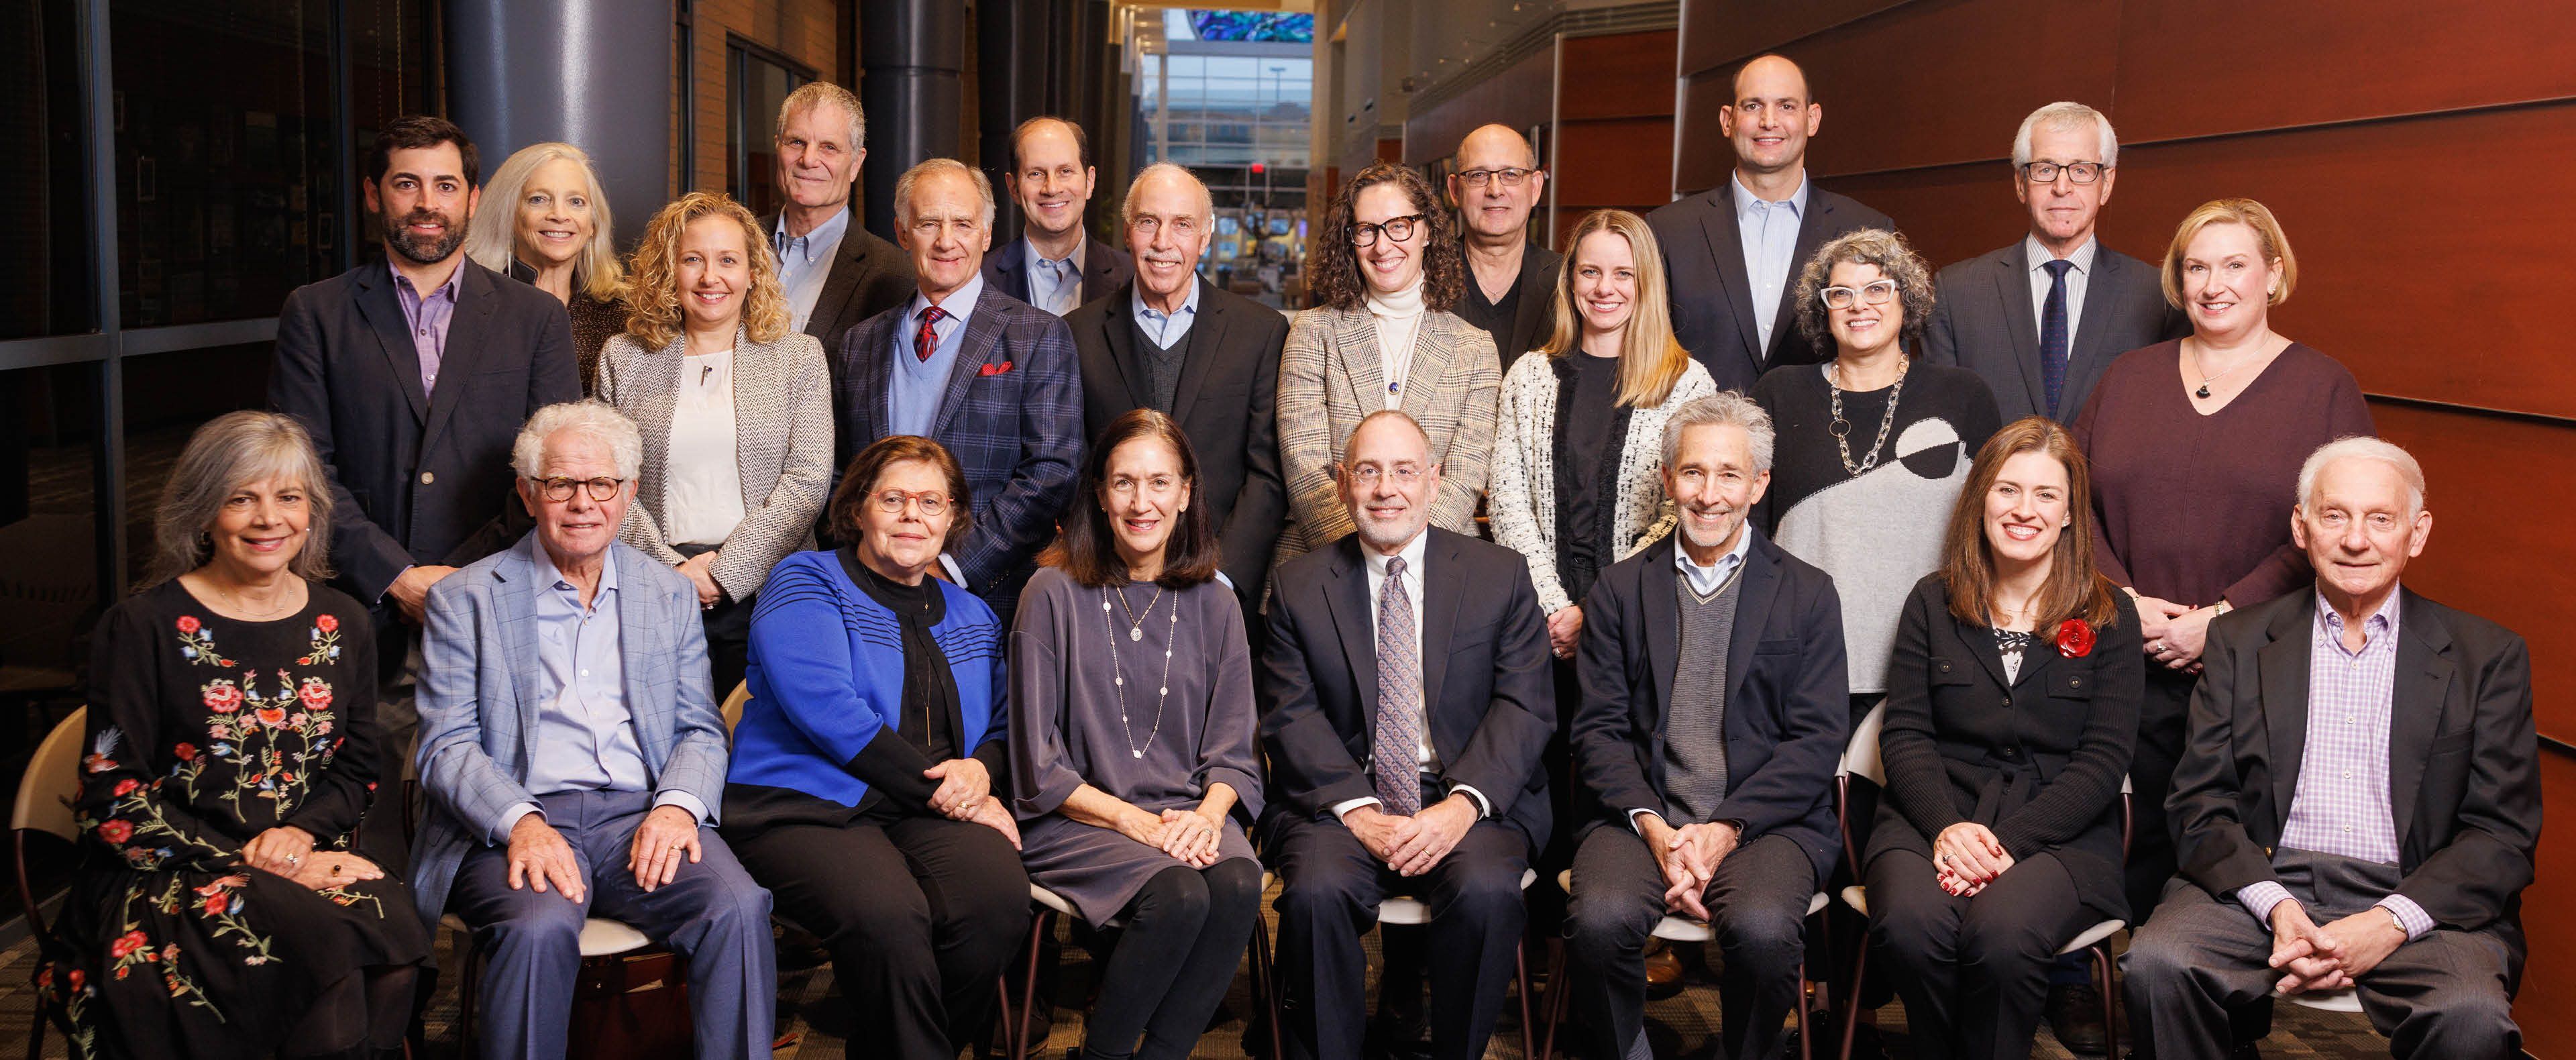 The Jewish Community Foundation Board of Trustees & Staff